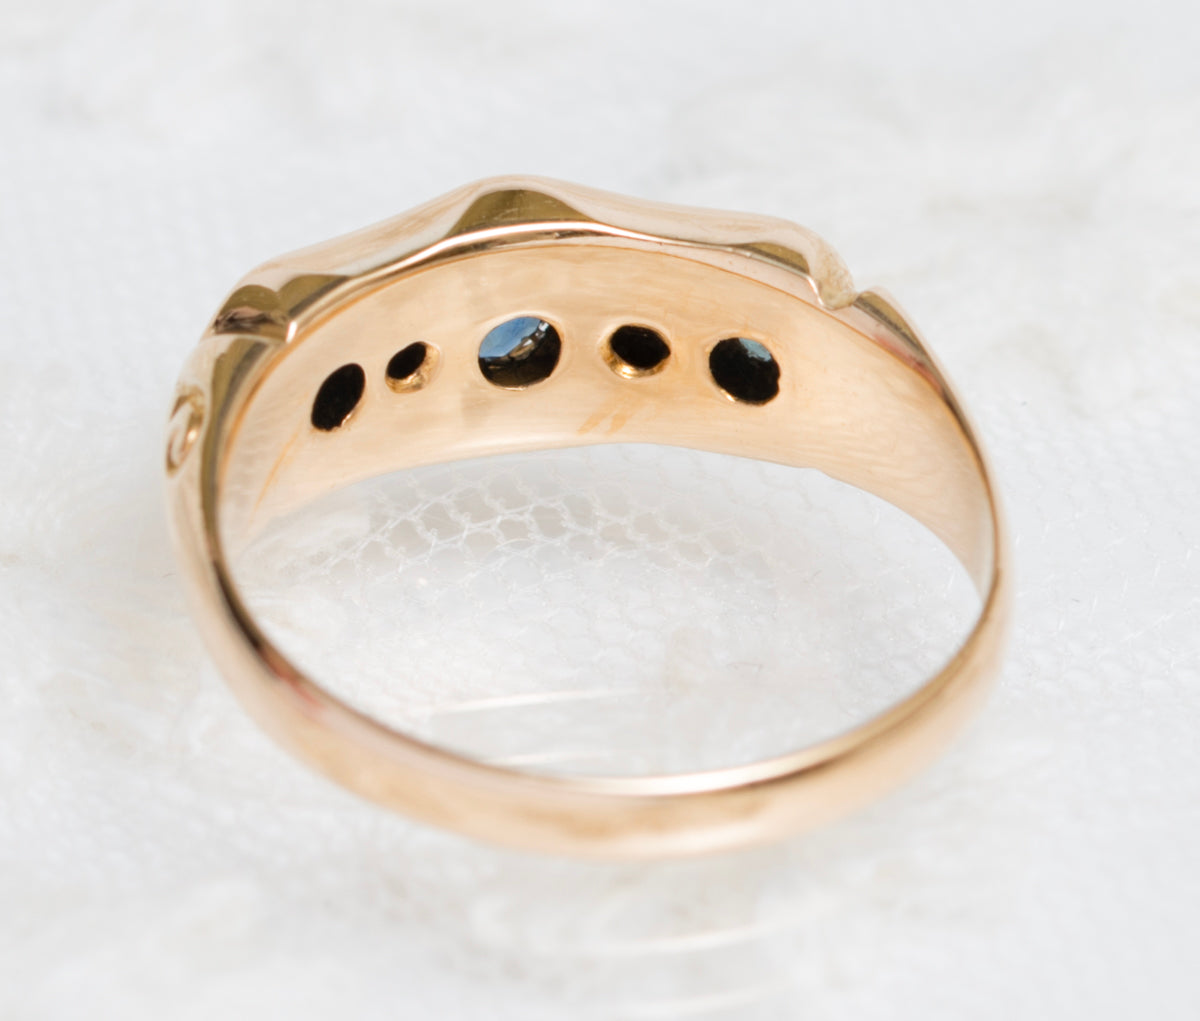 Antique 18ct Gold Natural Sapphire & Diamond Ring Chester 1912 Hallmark (A1903)